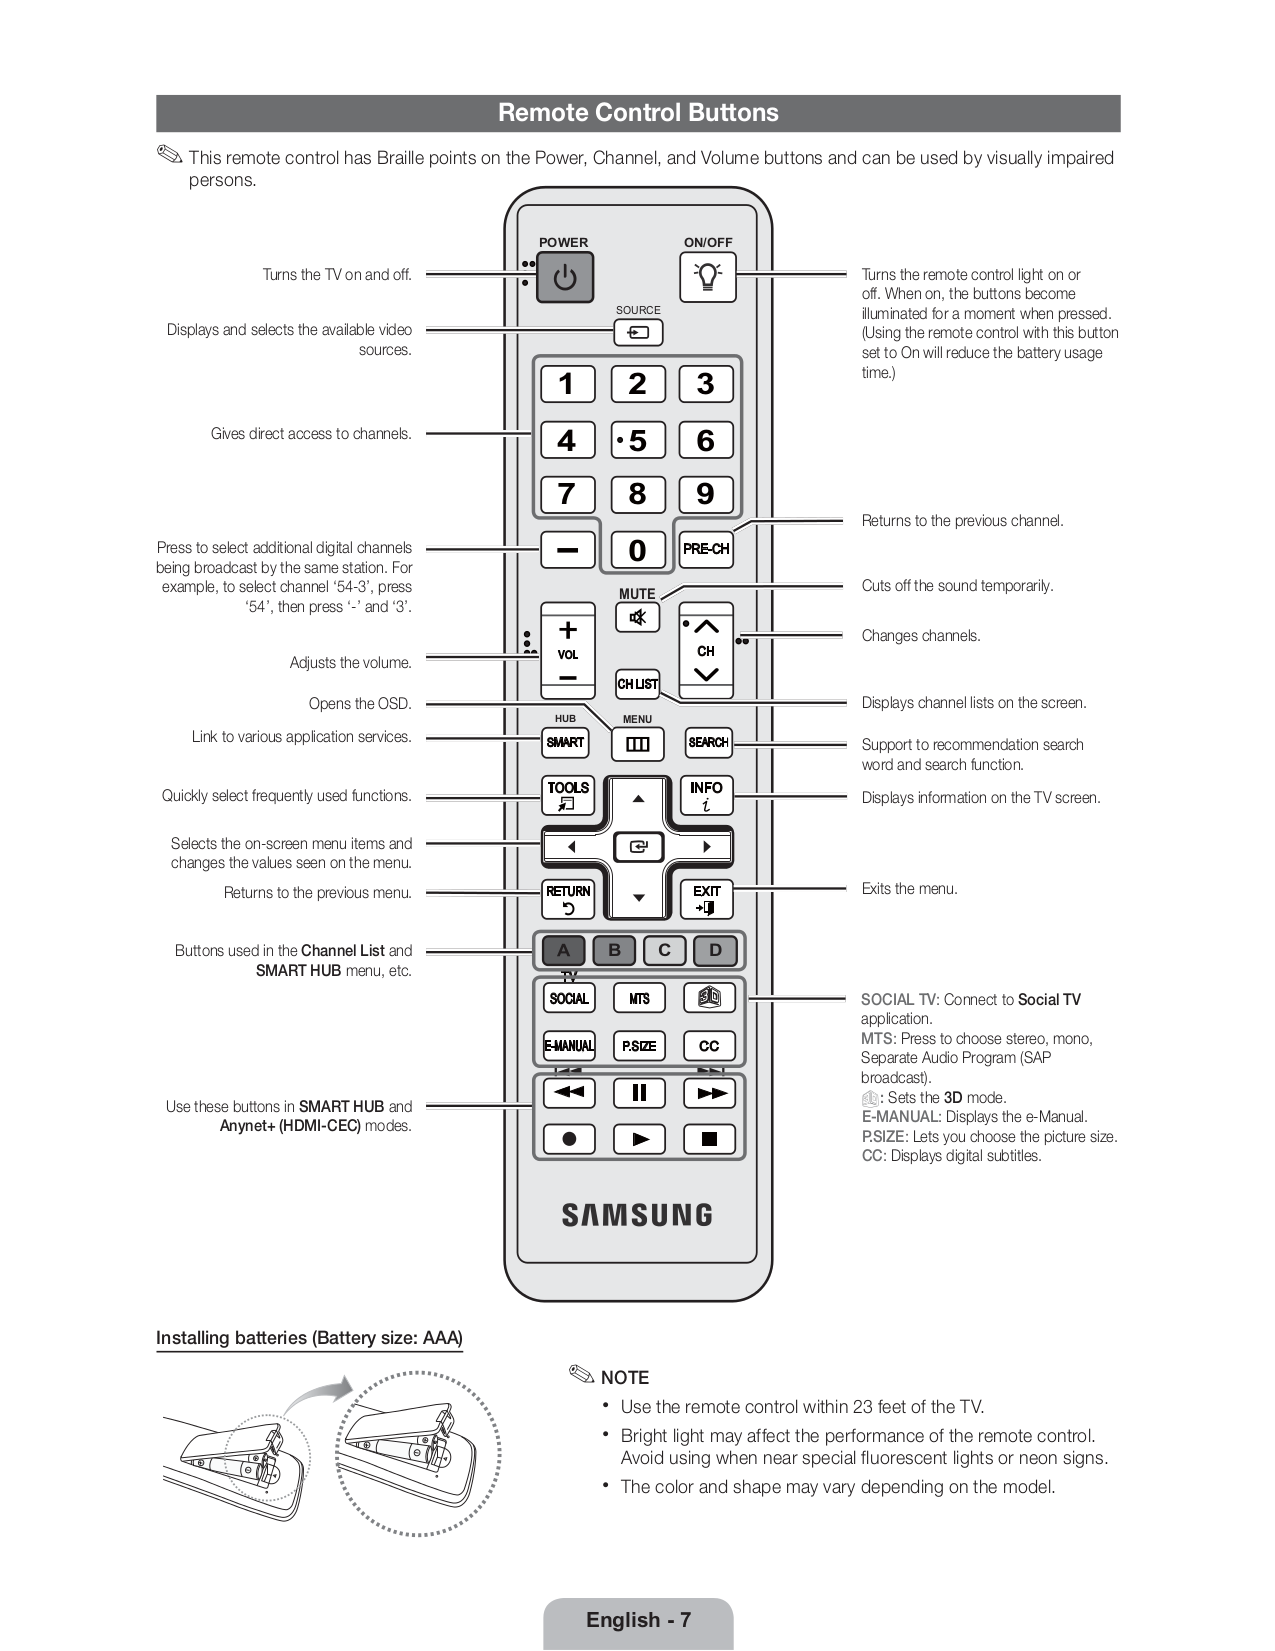 Кнопки пульта телевизора функции. Пульт для телевизора Samsung описание кнопок. Функциональные кнопки на пульте телевизора самсунг. Телевизор Samsung ue32c4000pw. Samsung le37c530f1w пульт.